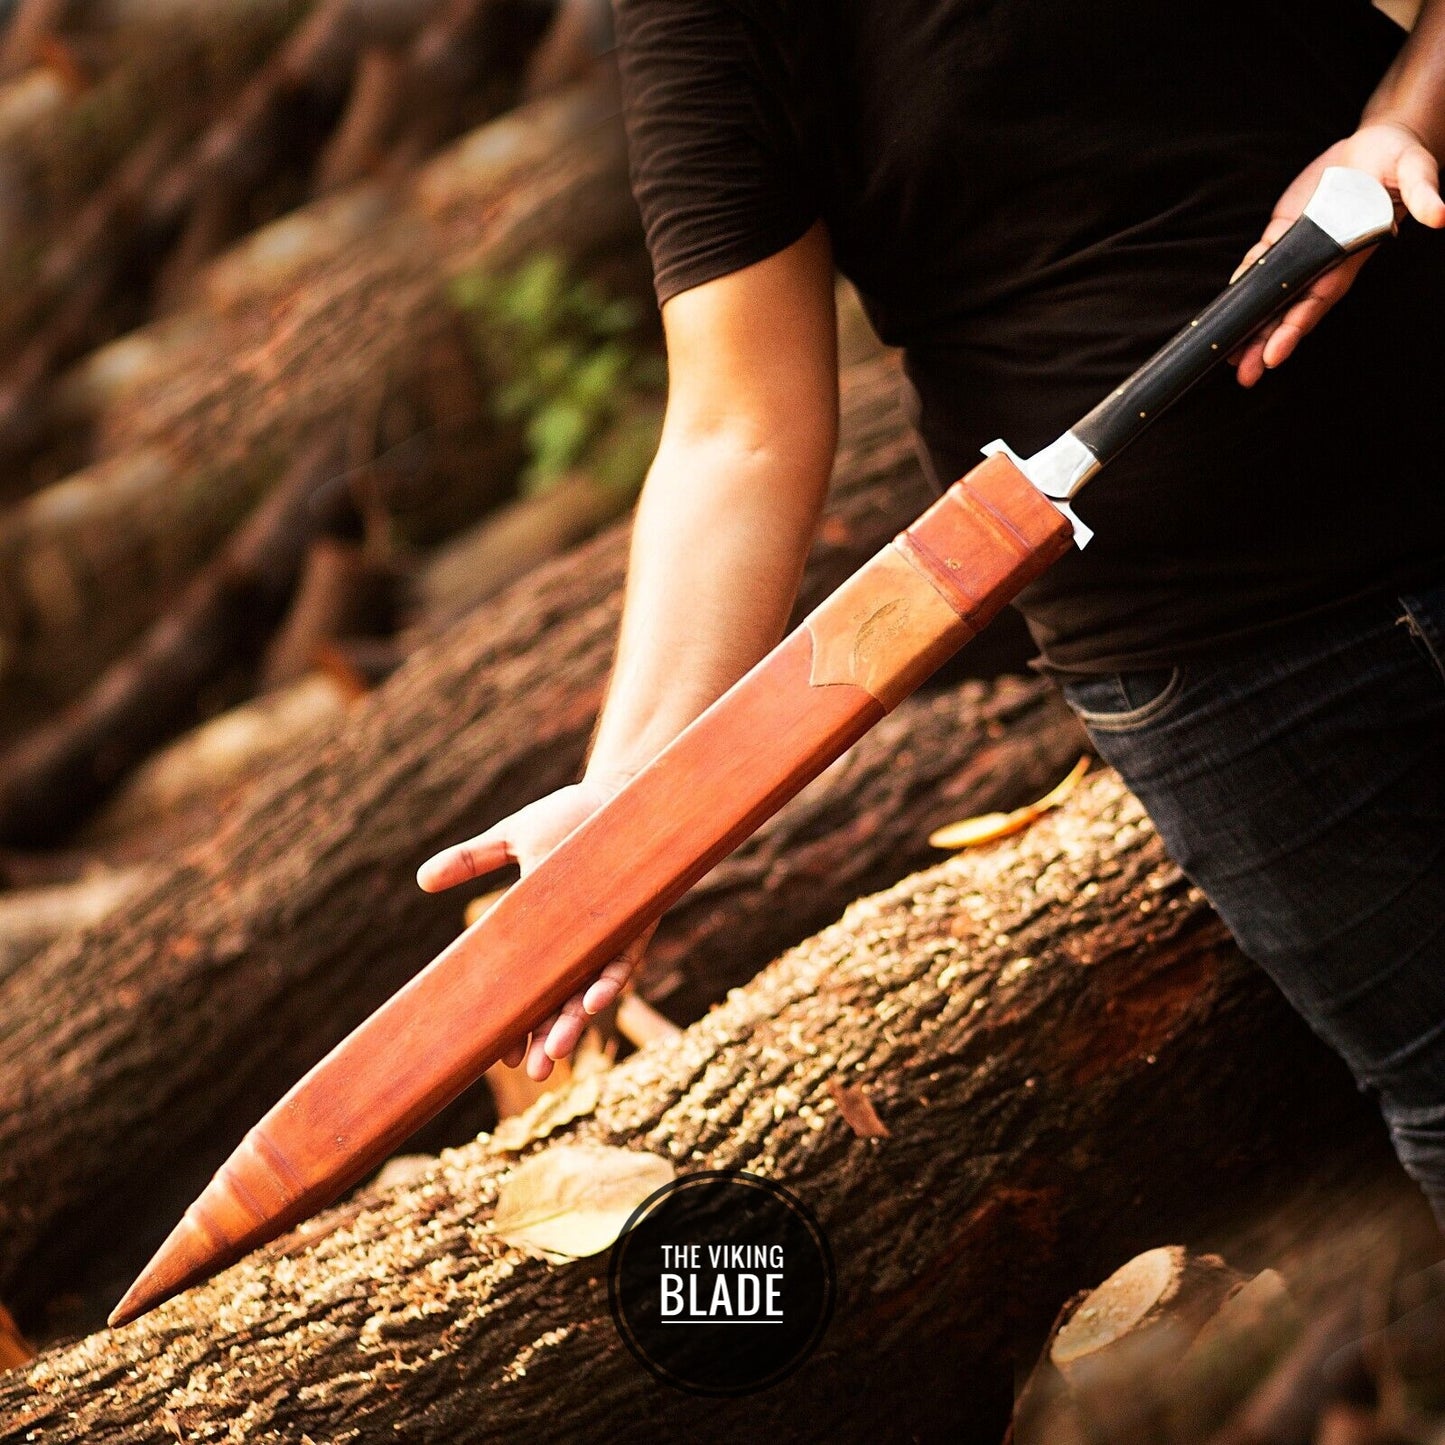 Custom Handmade Full Tang Steel Sword With Scabbard- Battle Ready Sharp Sword